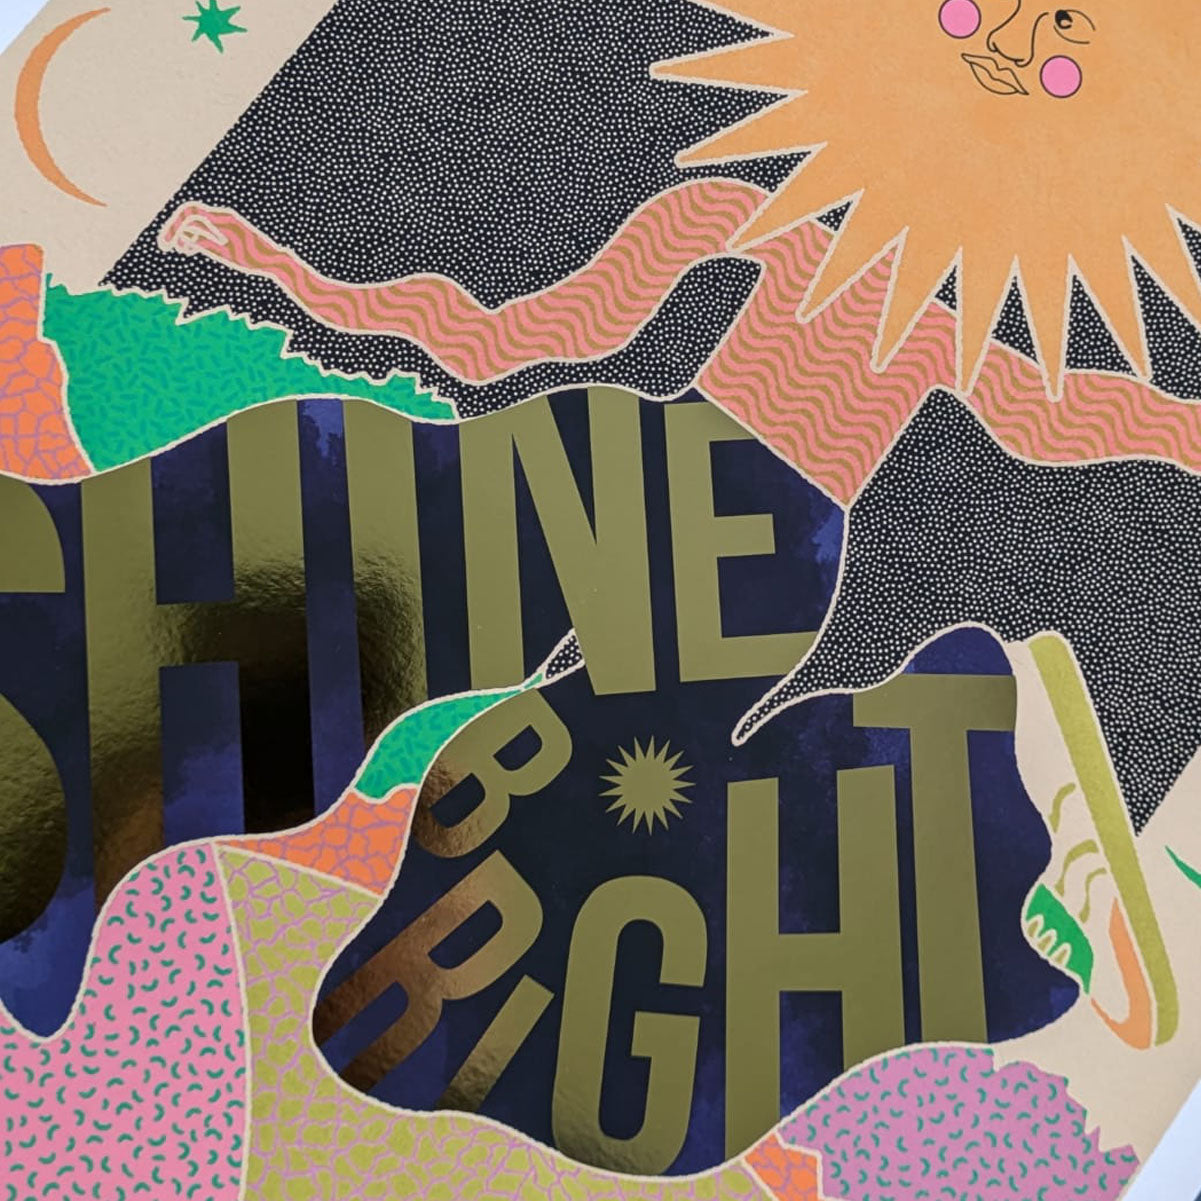 Shine Bright A3 Gold Foiled Art Print-4